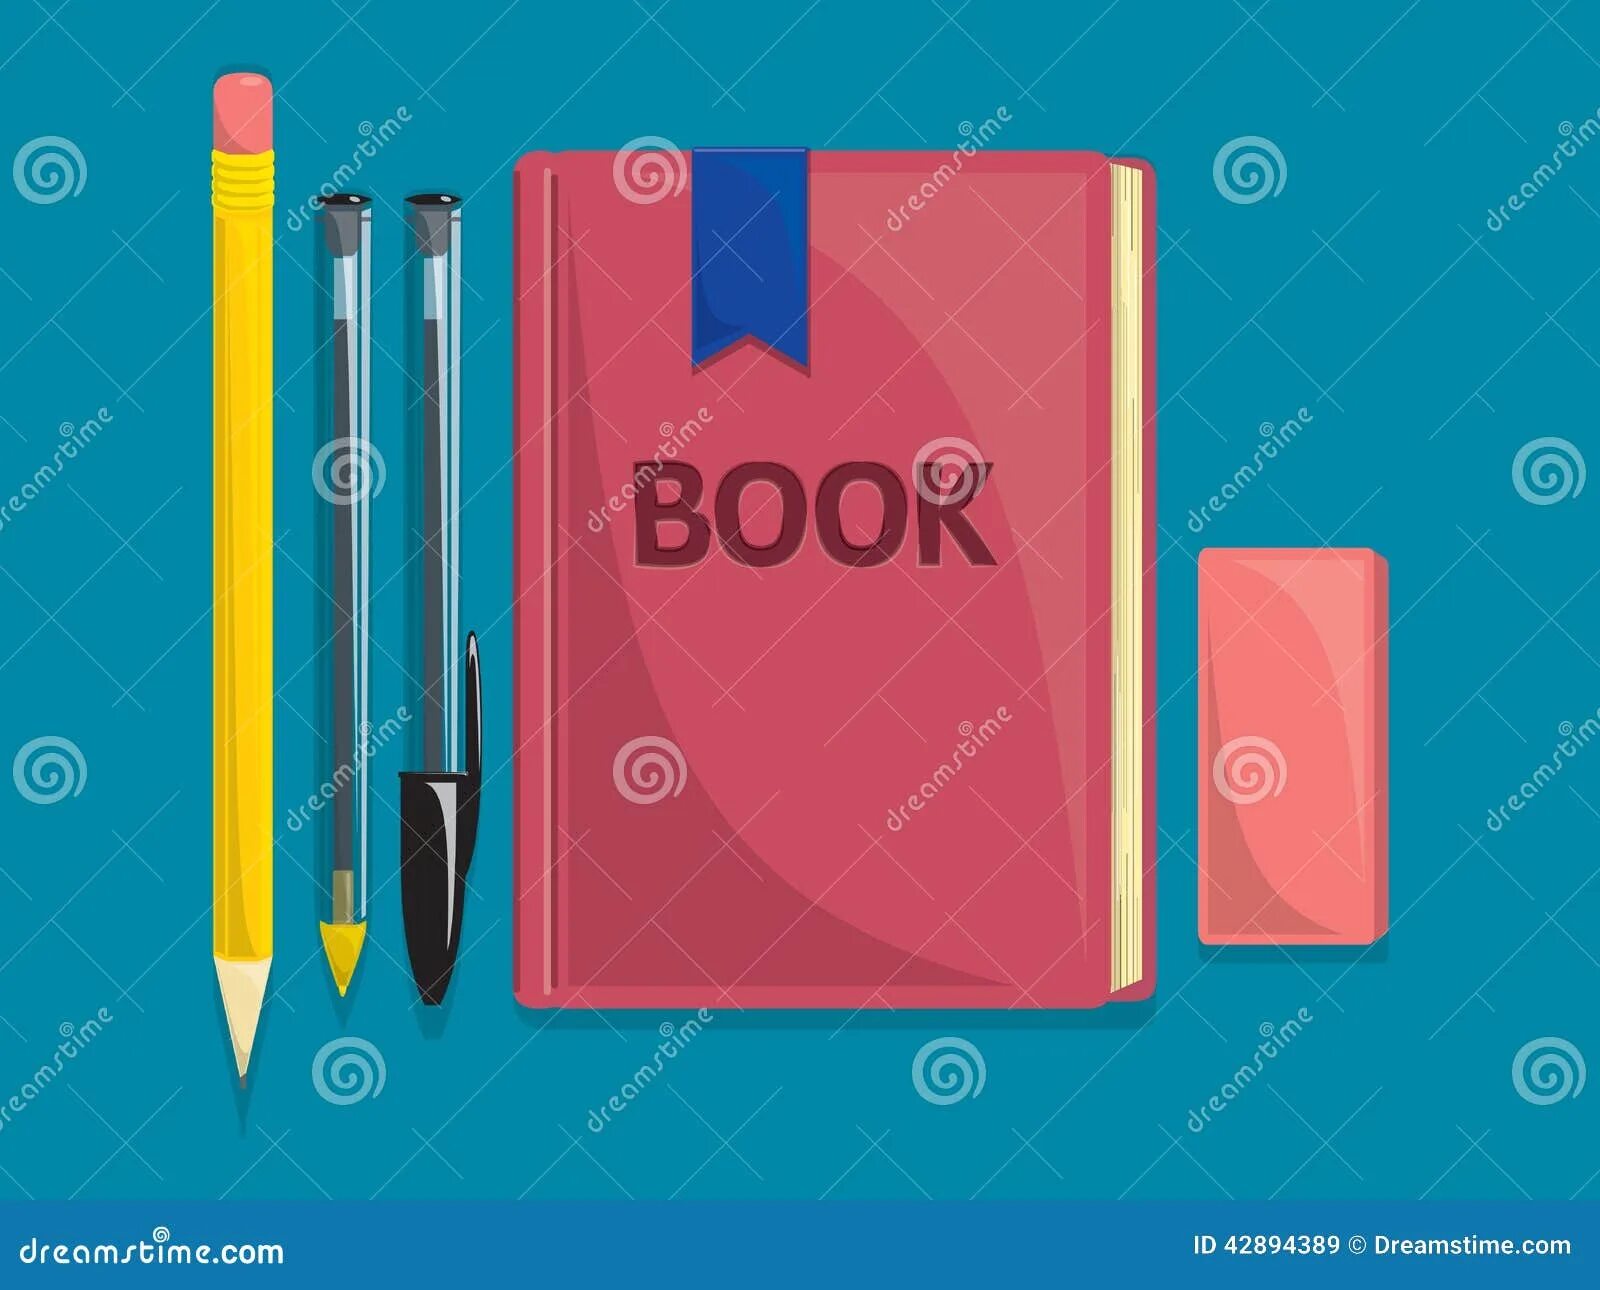 Книга ручка карандаш линейка ластик на столе. Карандаш стерка книга. Столе с книга, ручка, карандаш, линейка ластик рисунок. Pen pencil book